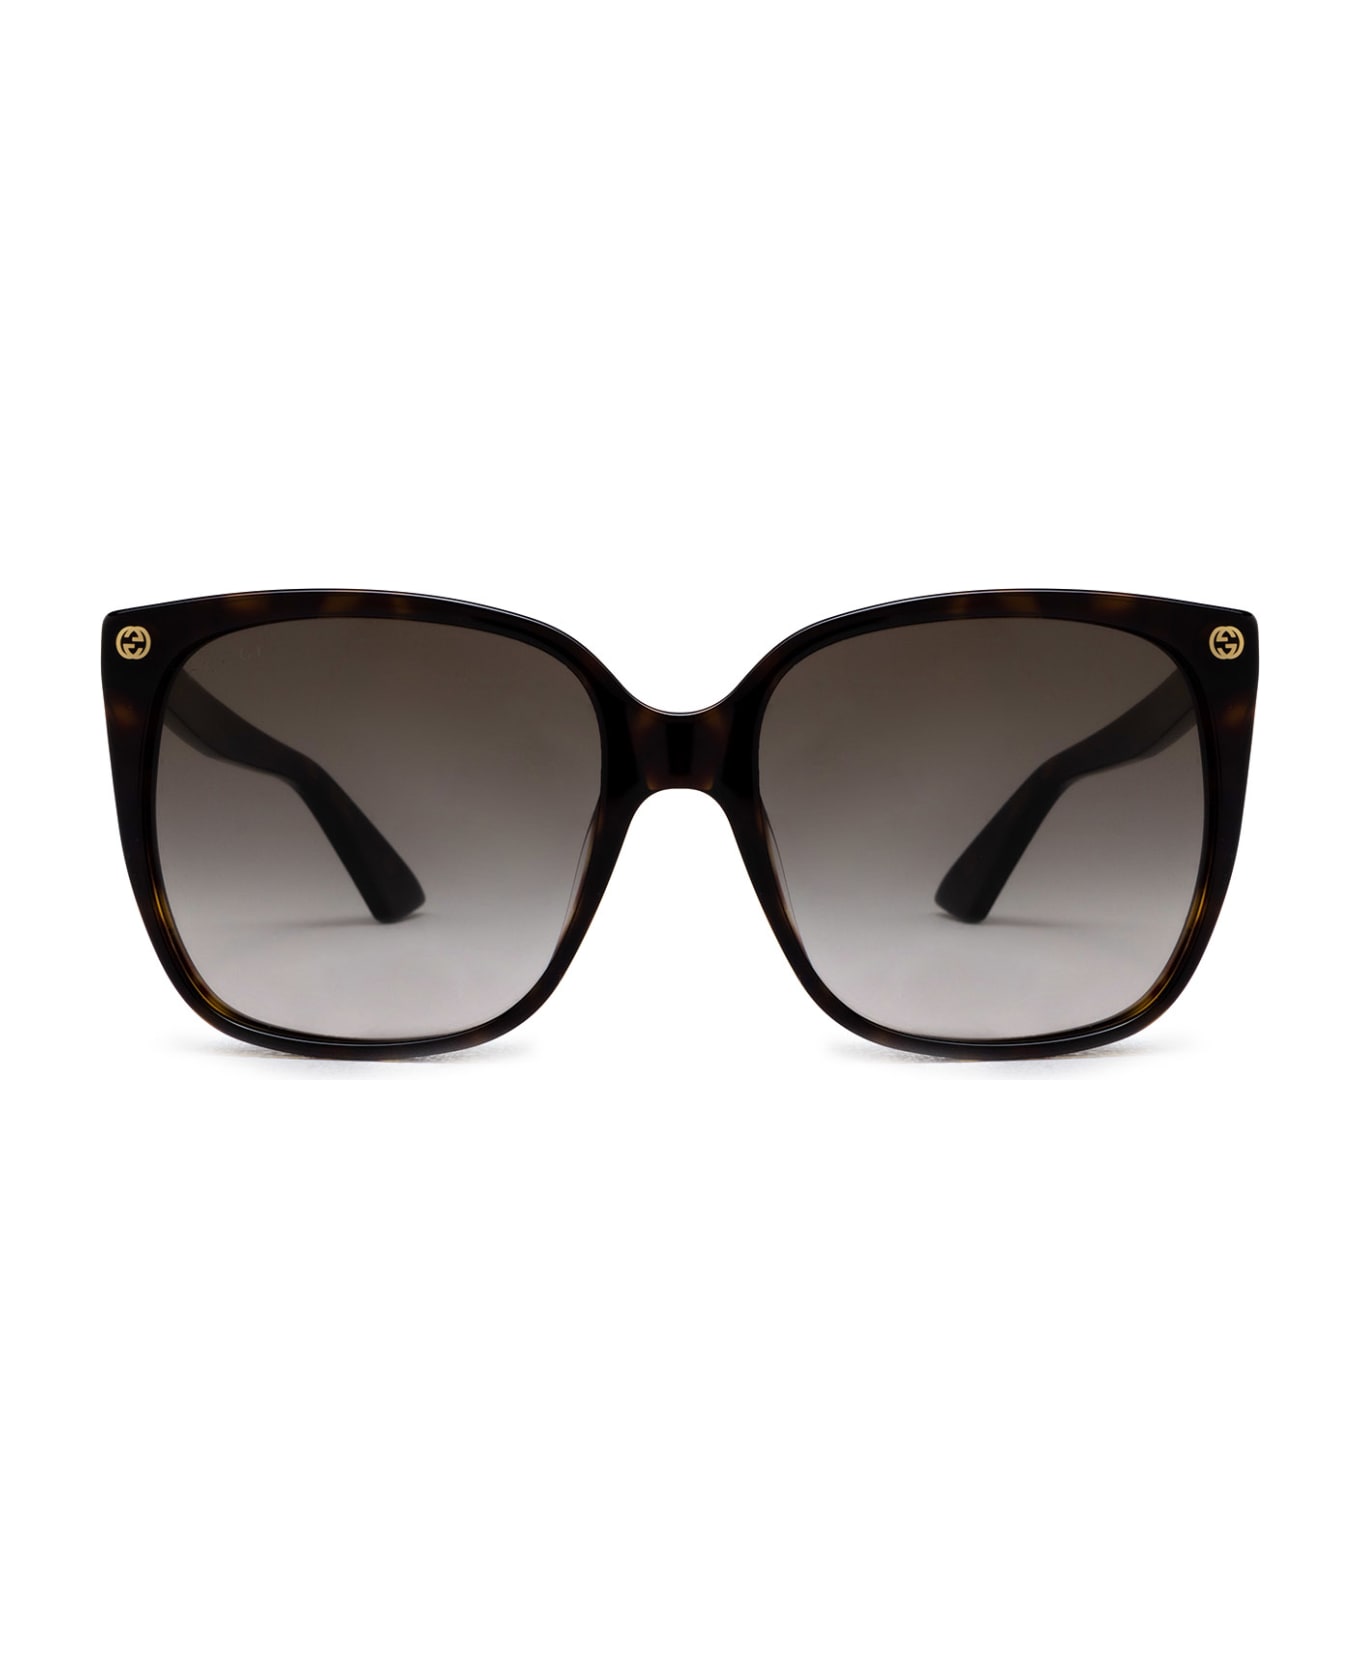 Gucci Eyewear Gg0022s Havana Sunglasses - Havana